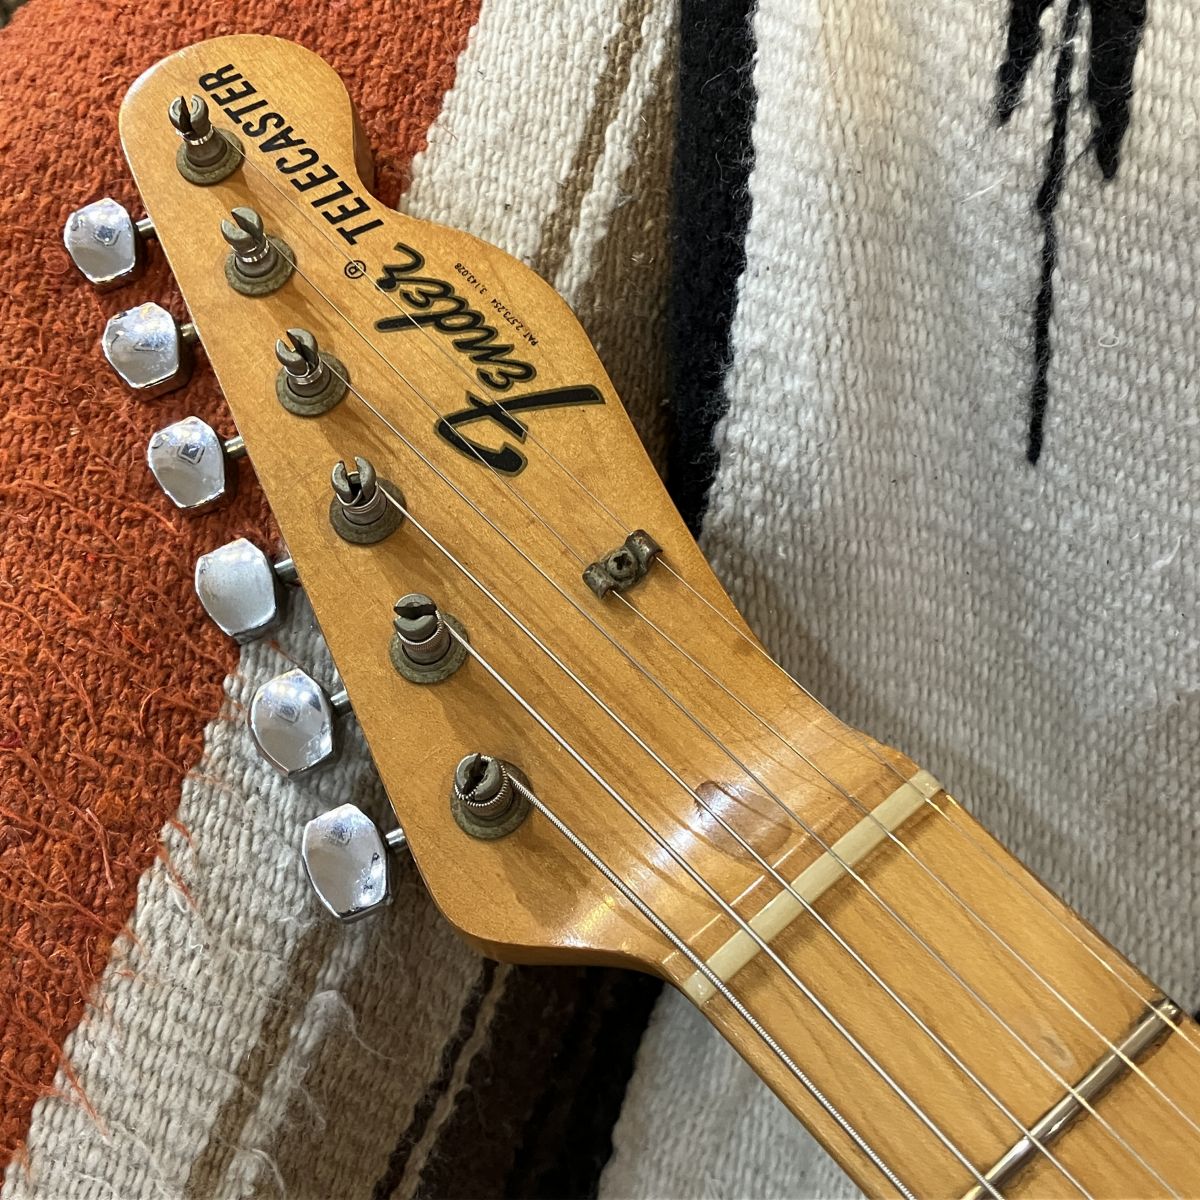 [SN 295599] USED Fender / 1972 Telecaster Blonde [04]